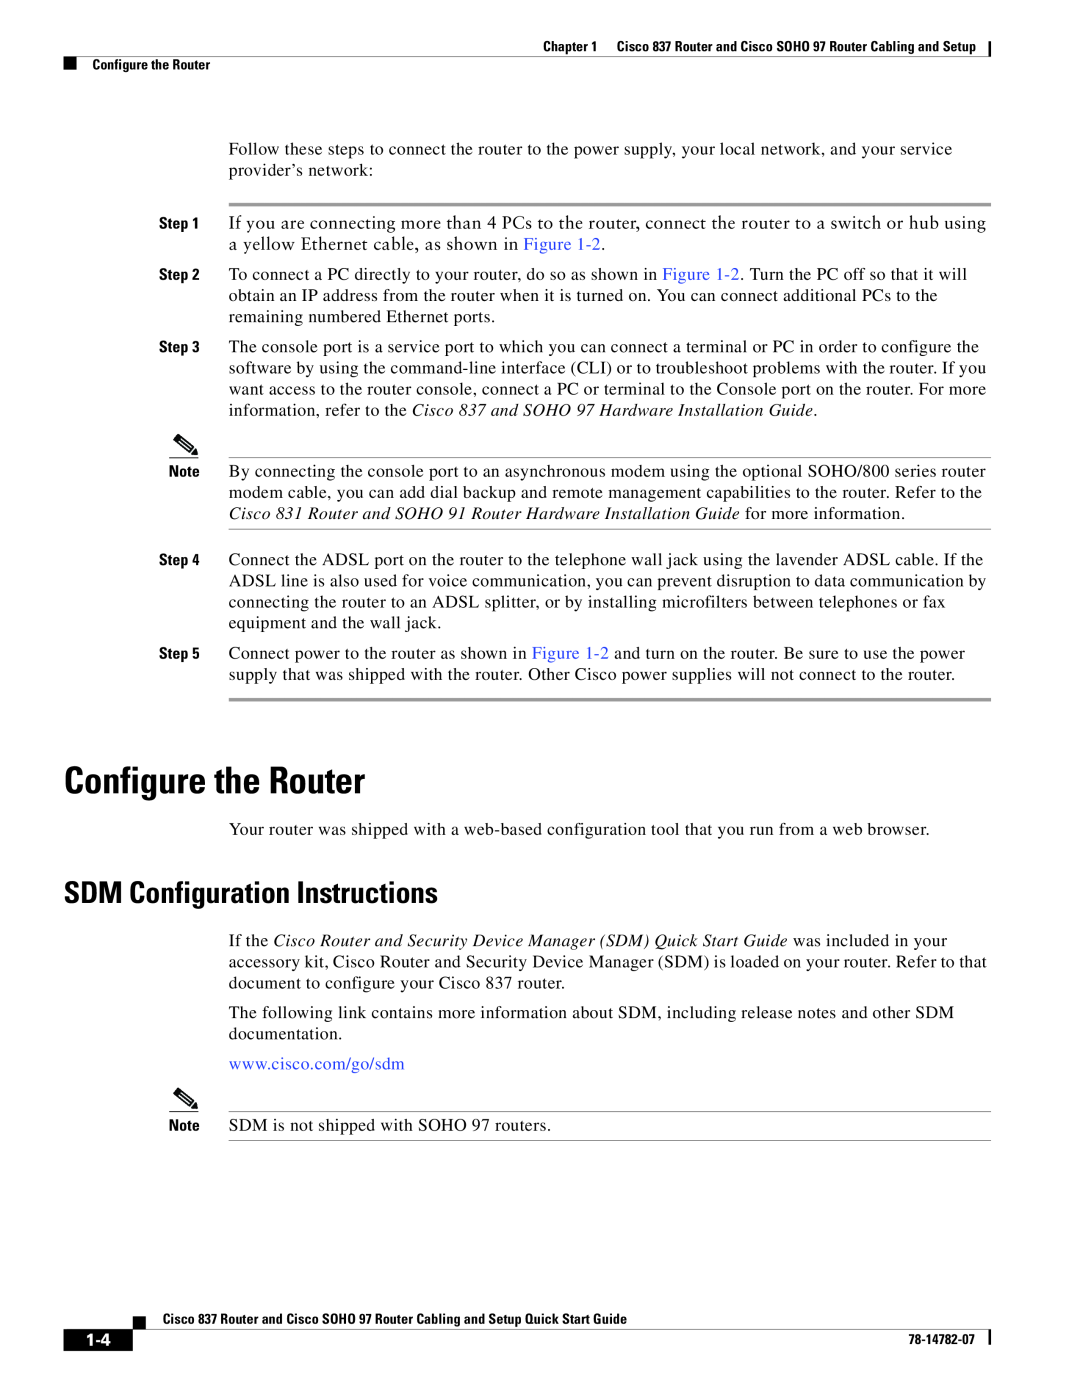 Cisco Systems SOHO 97 quick start Configure the Router, SDM Configuration Instructions 